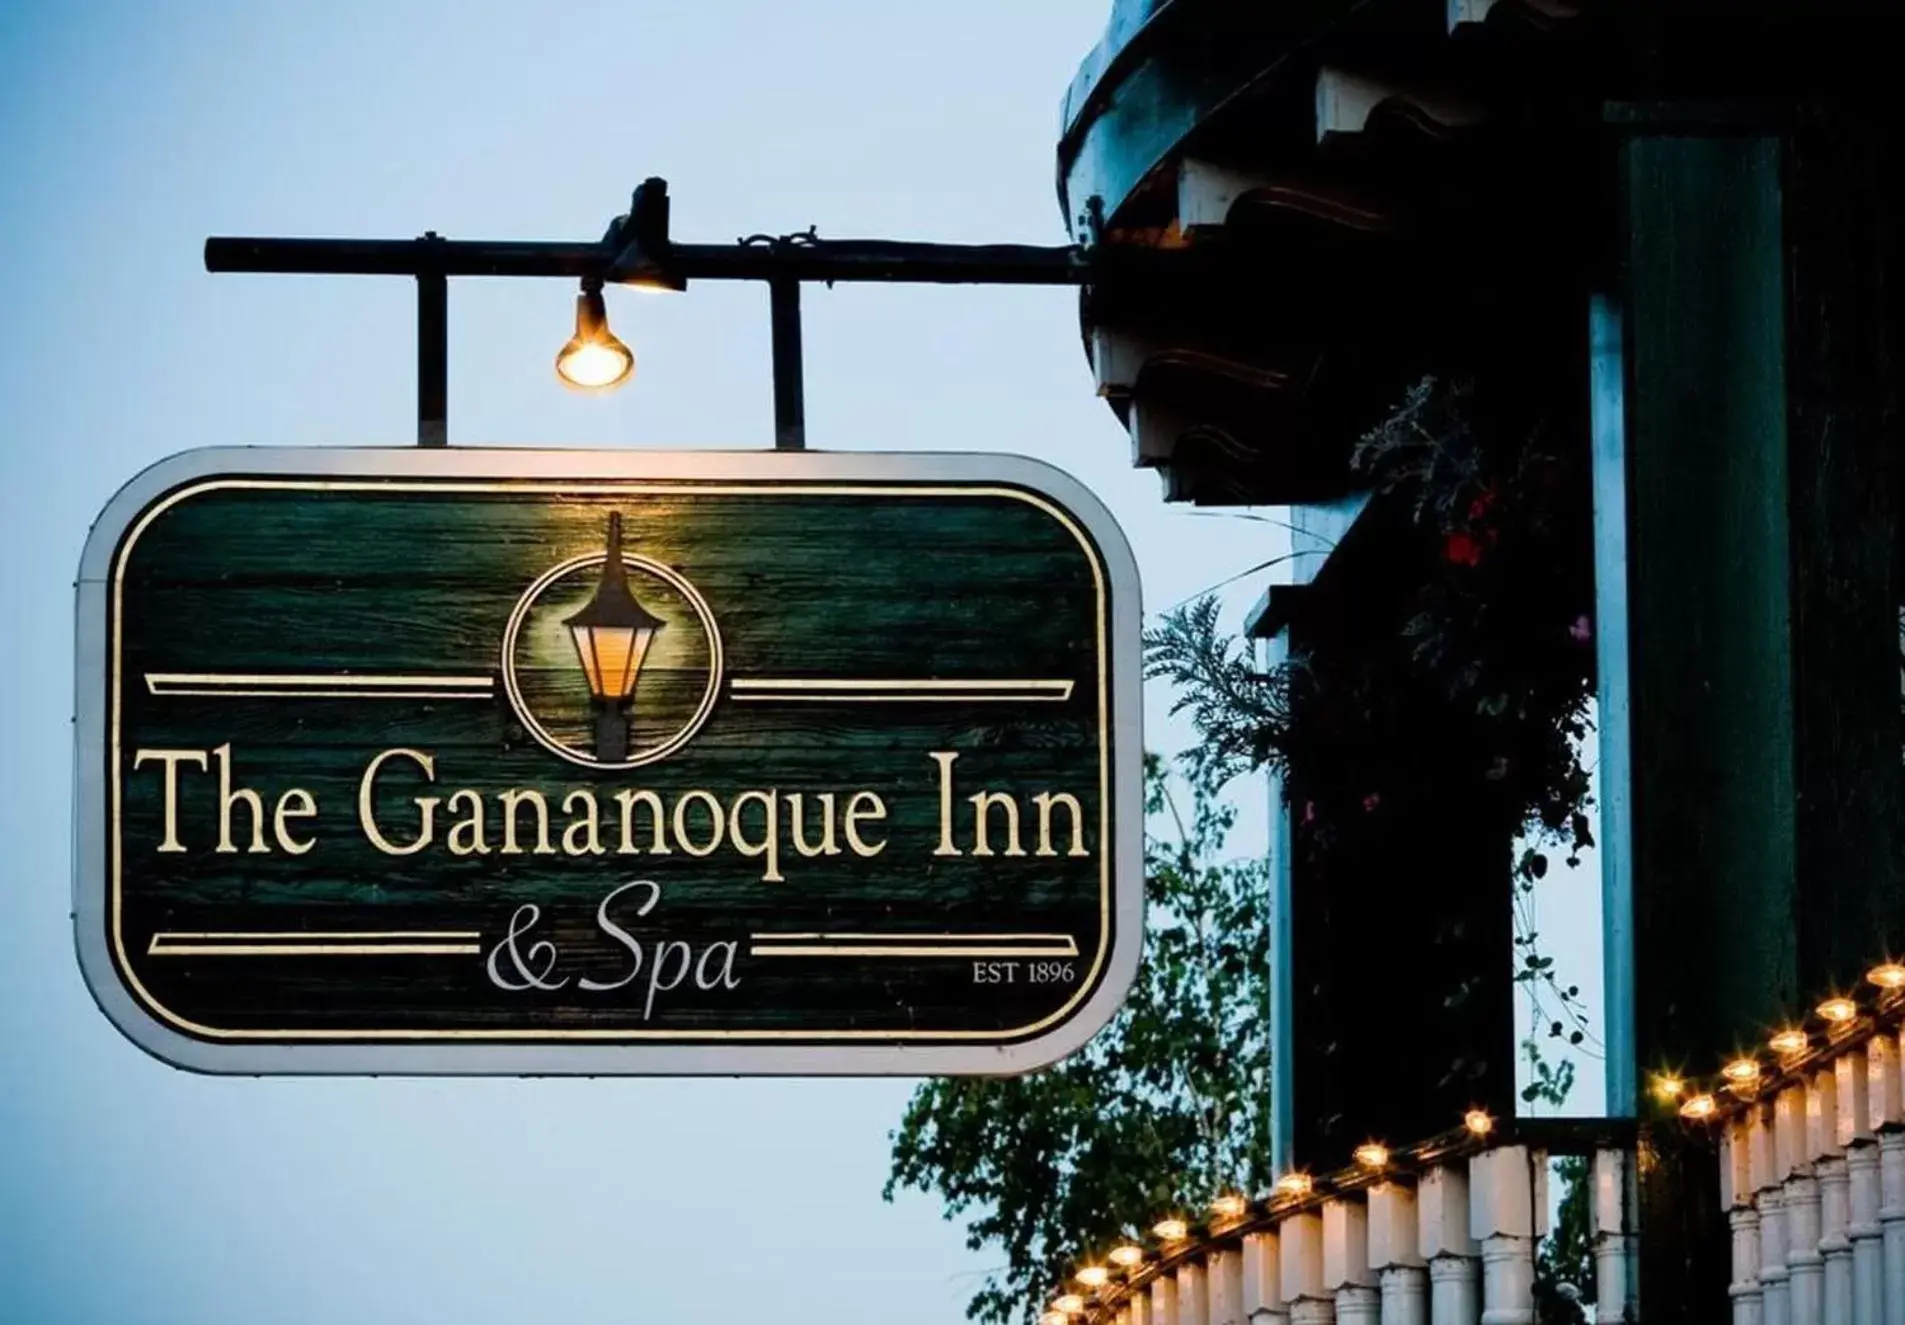 Property logo or sign in The Gananoque Inn & Spa